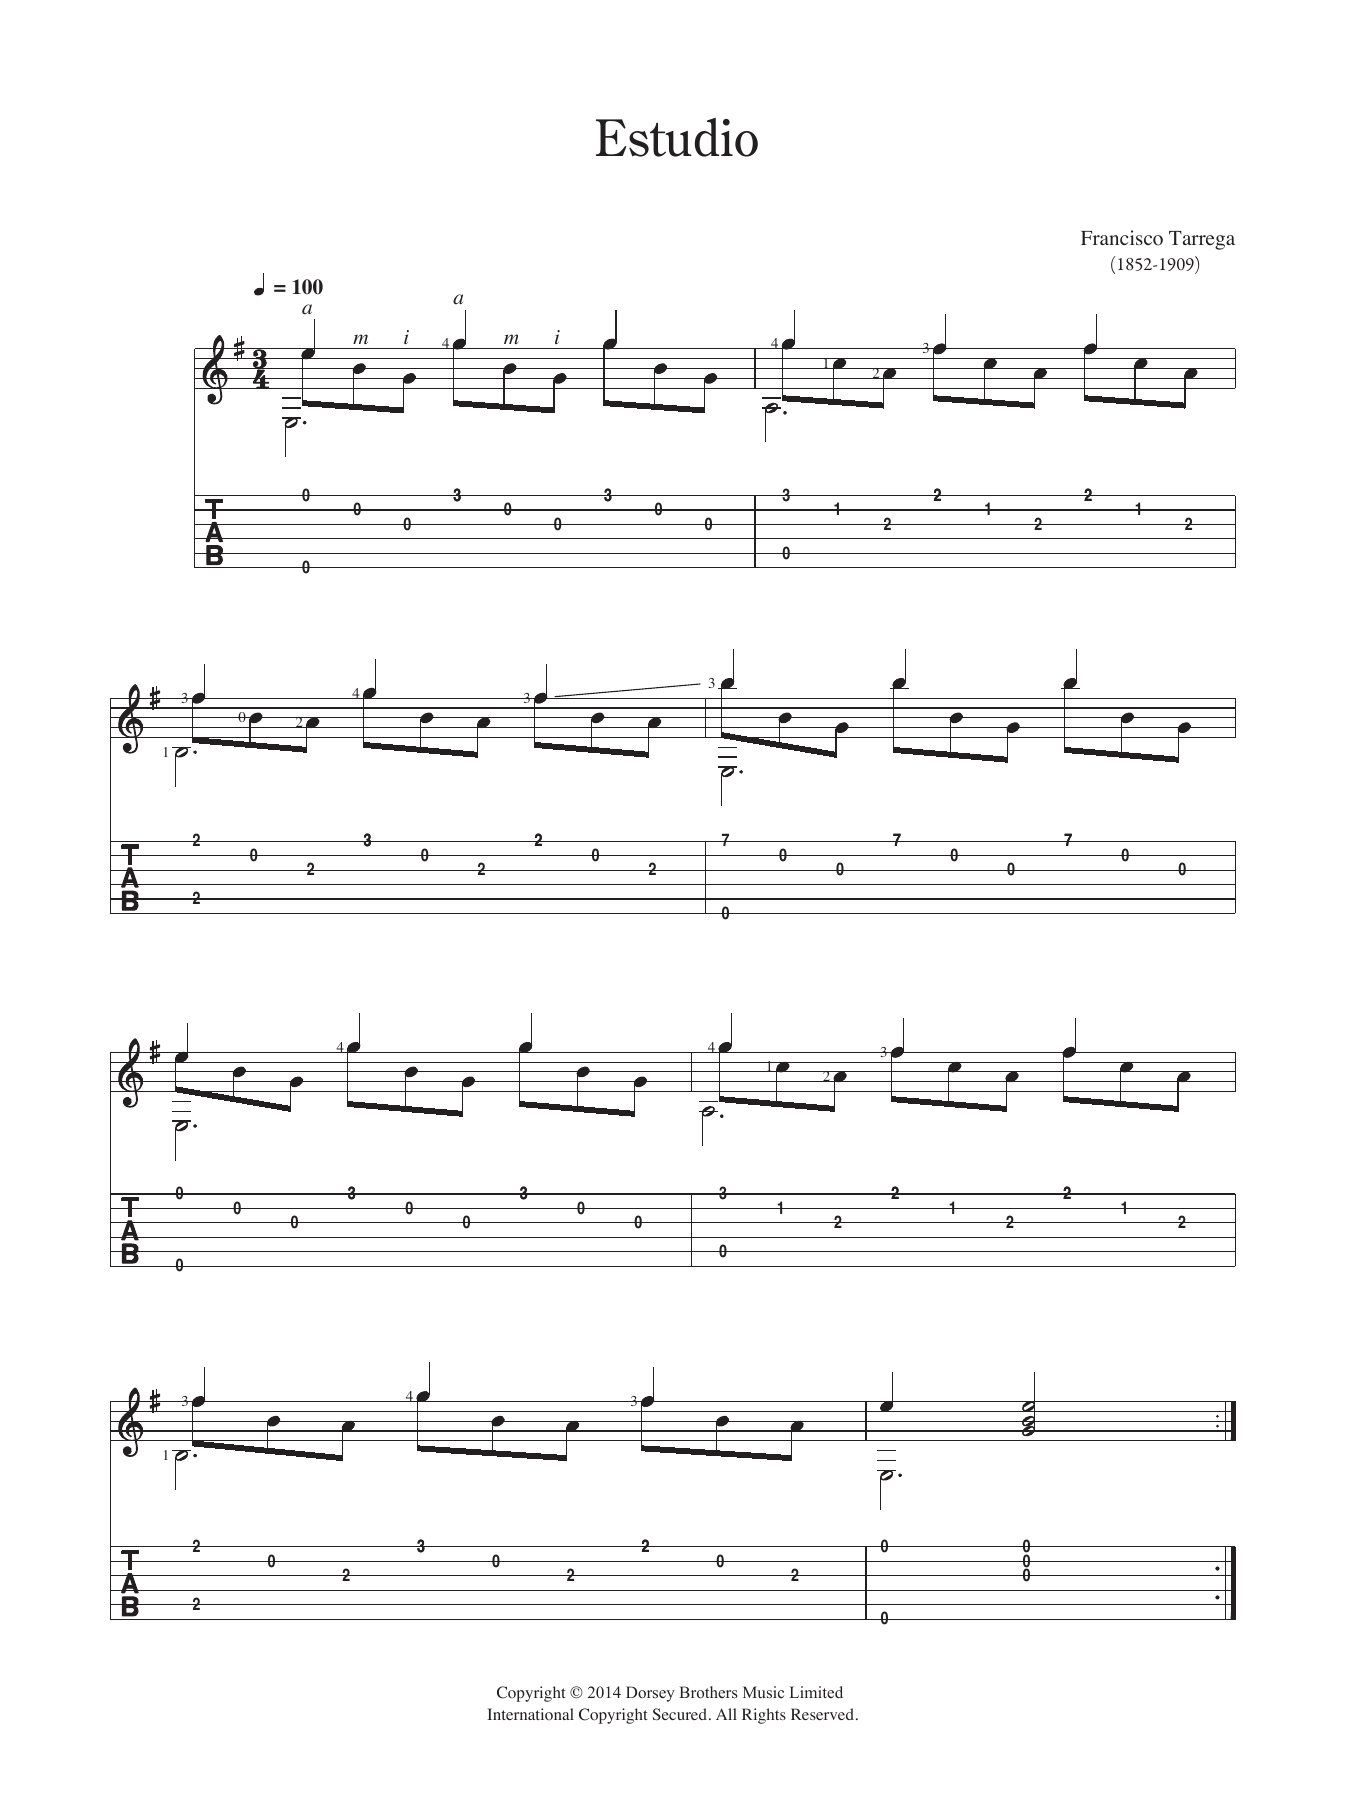 Francisco Tárrega Estudio Sheet Music Notes & Chords for Guitar - Download or Print PDF